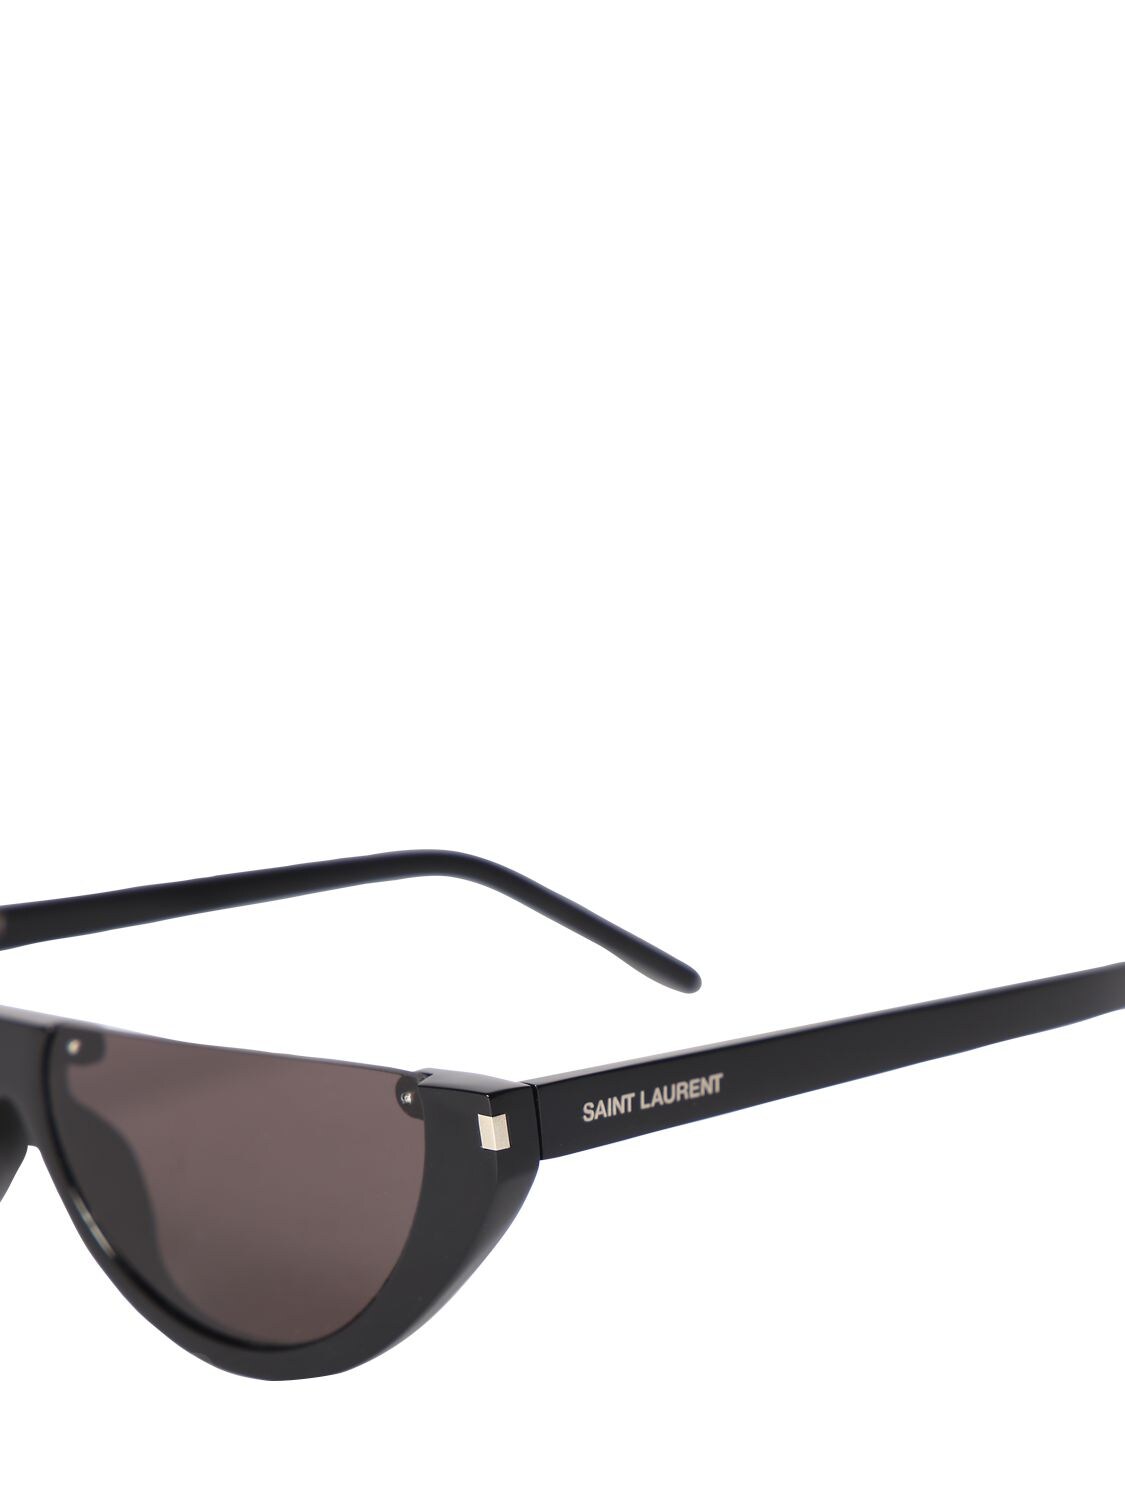 SL 563 Cat Eye Sunglasses in Black - Saint Laurent